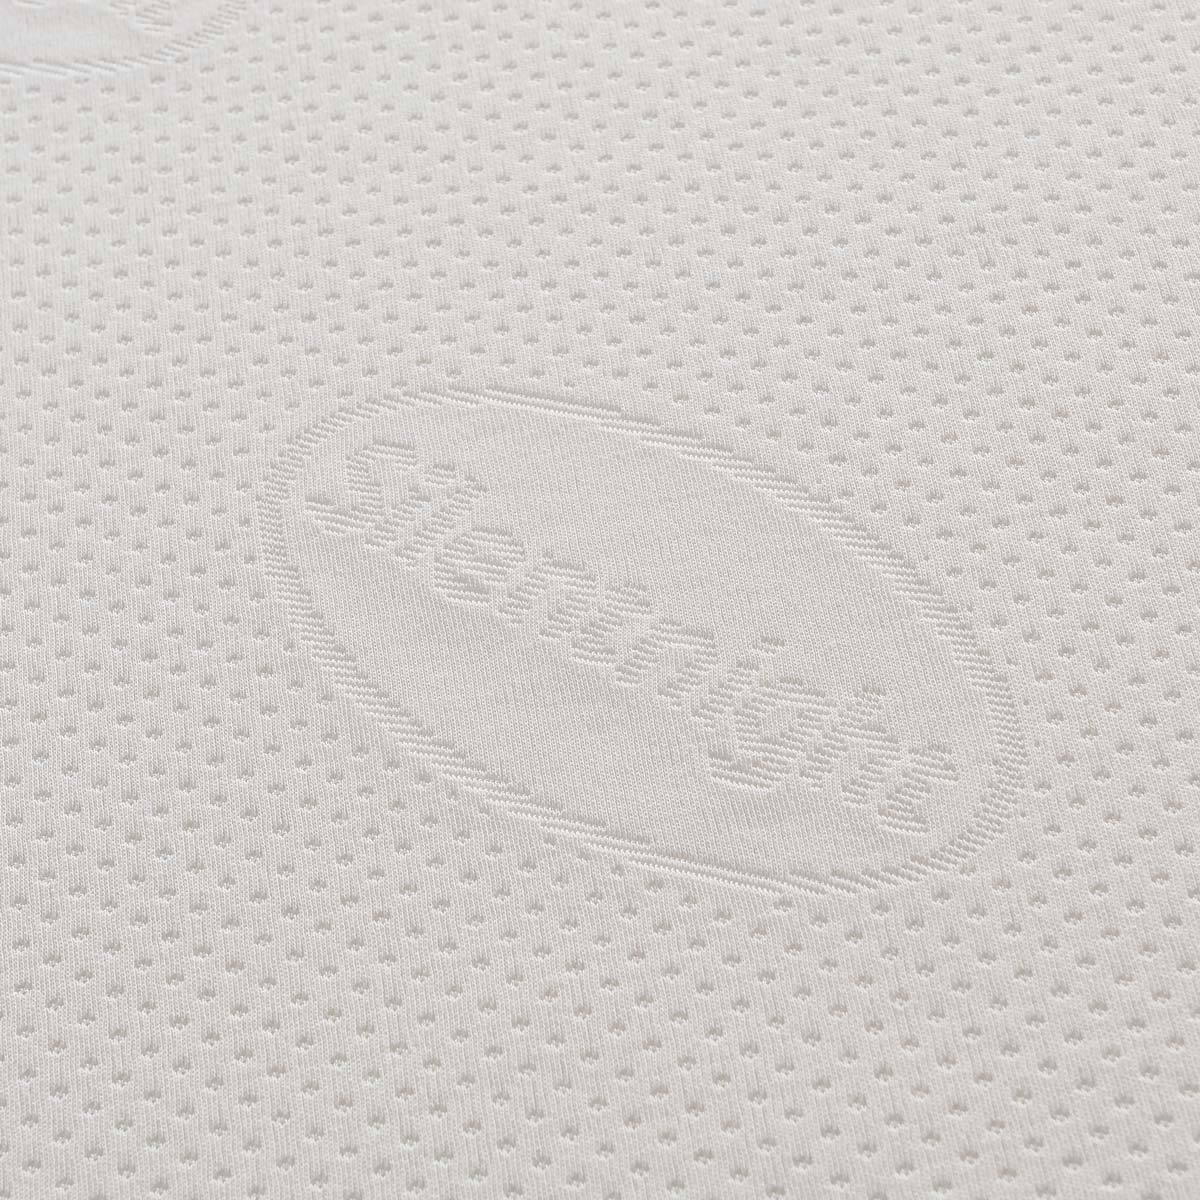 Close up detail of silentnight logo on mattress cover